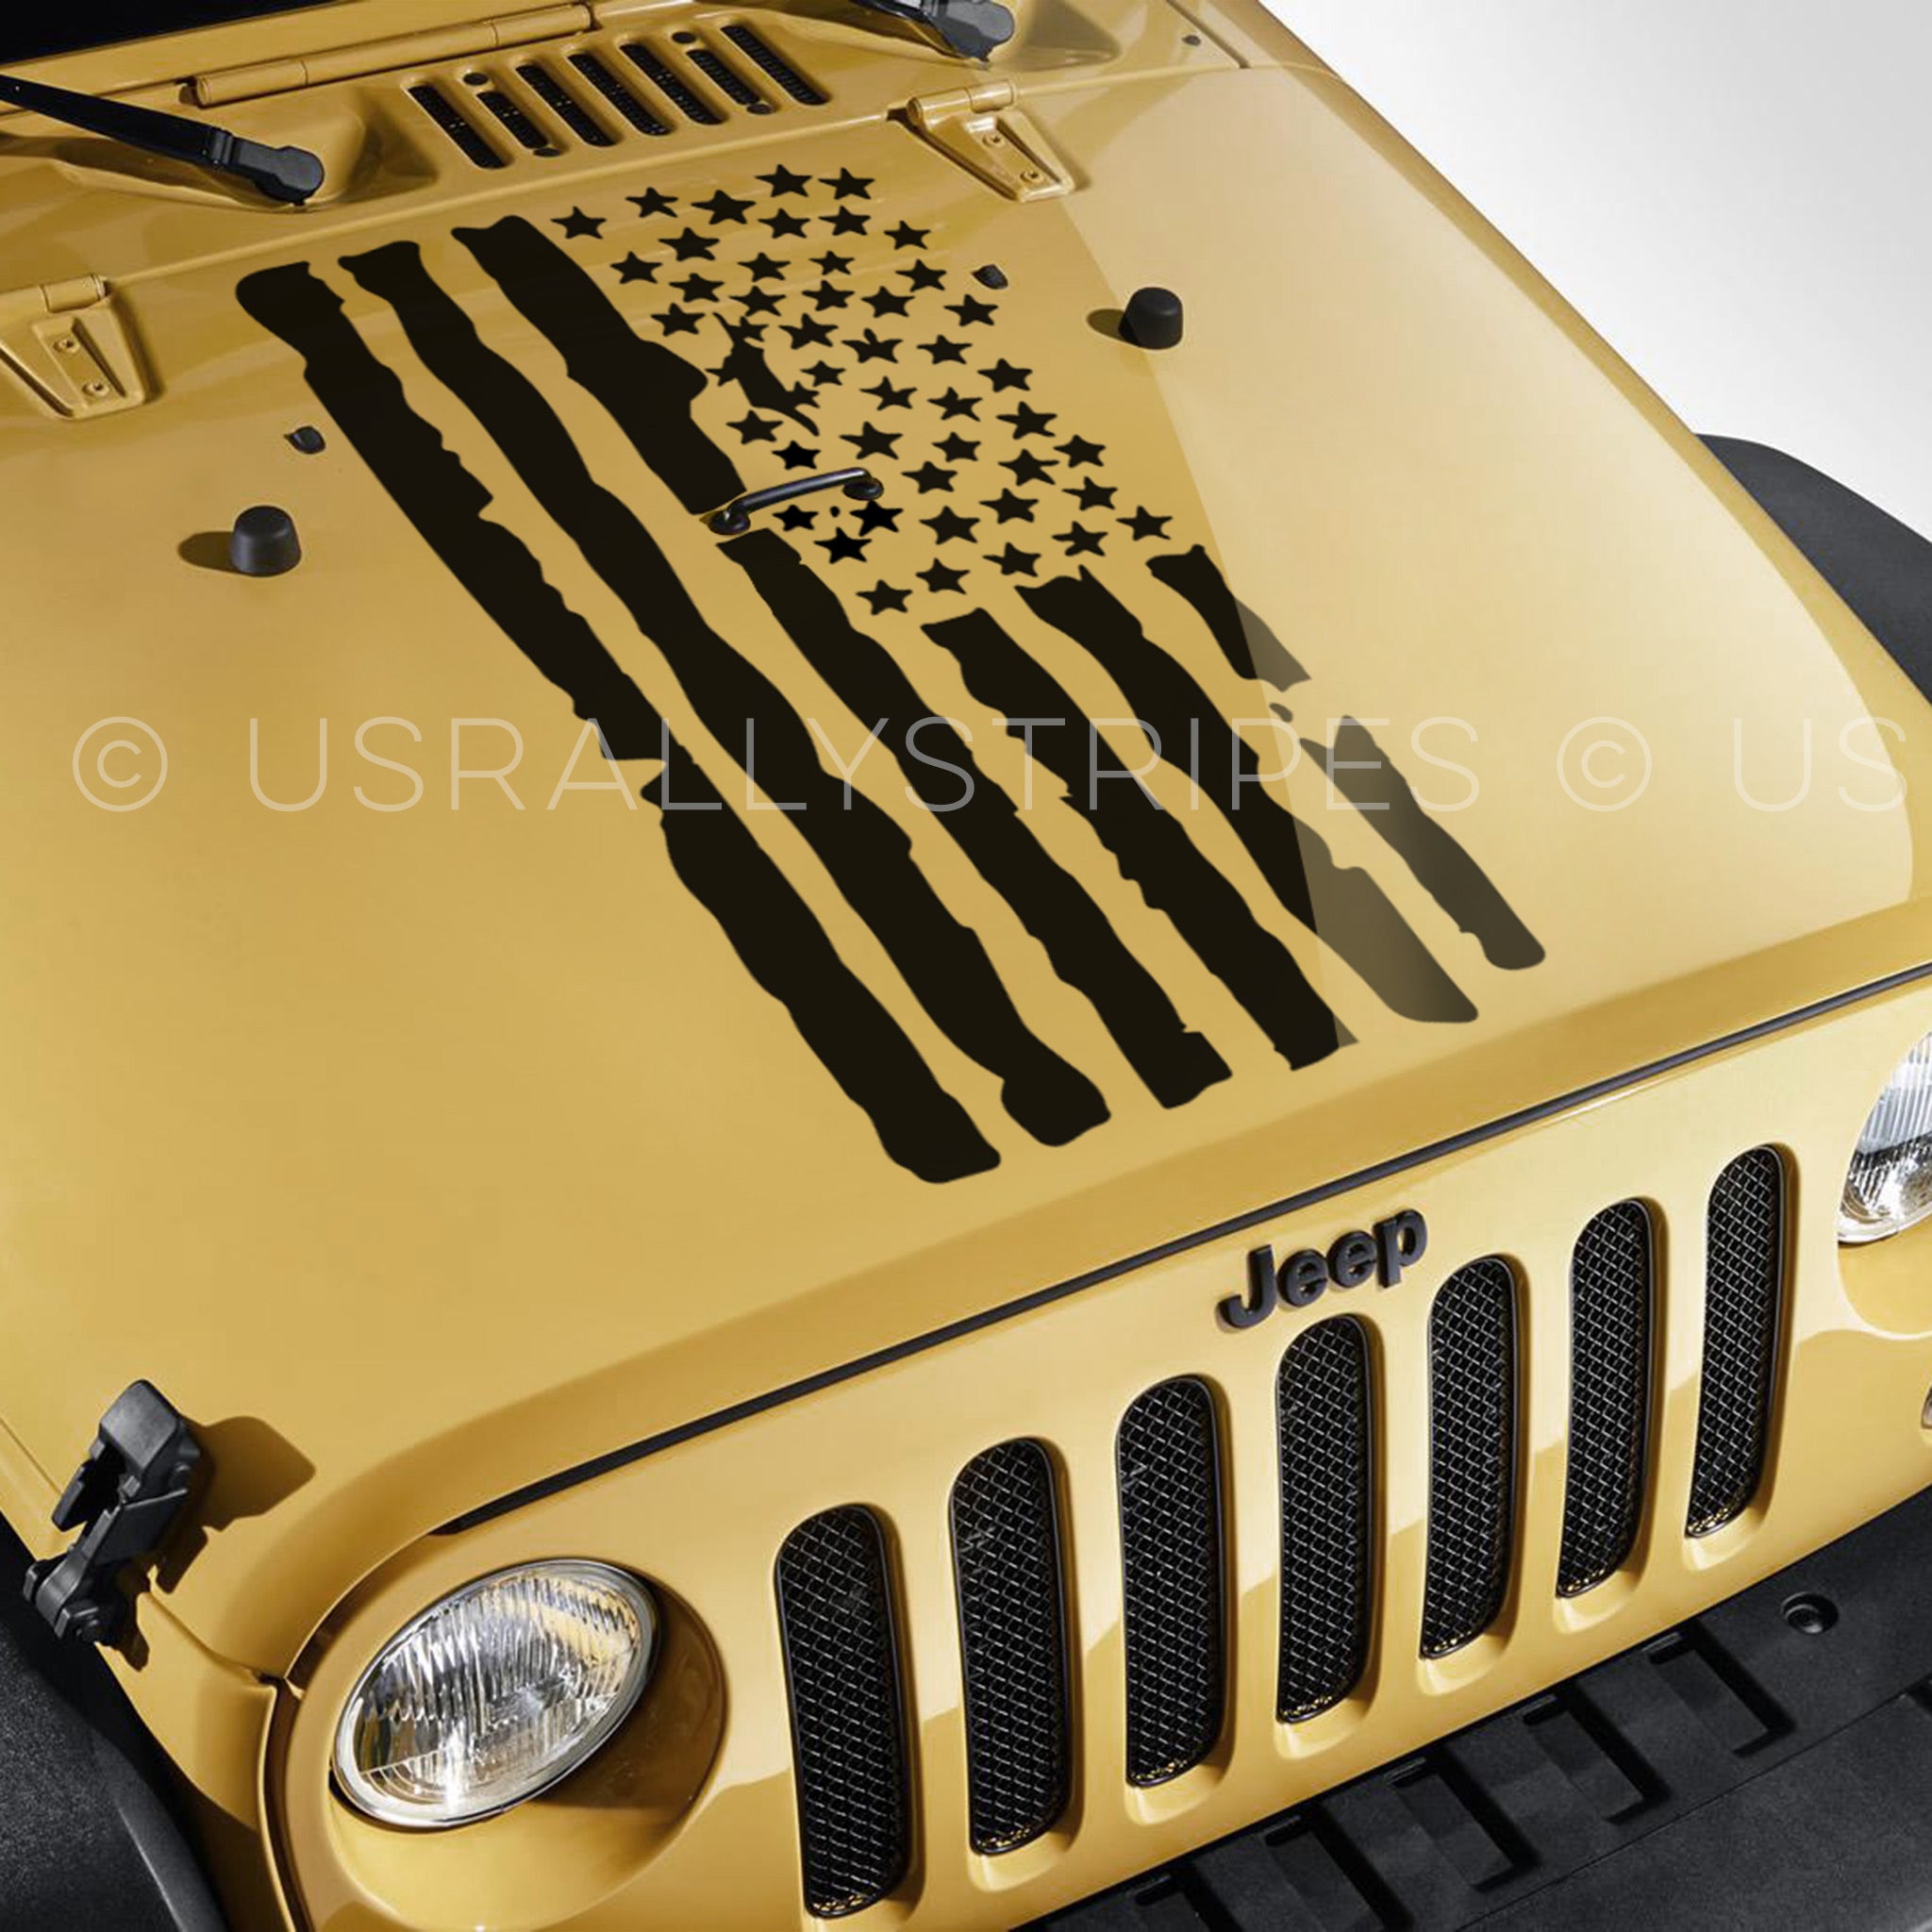 USA distressed flag pre-cut decal for Jeep Wrangler hood – US Rallystripes